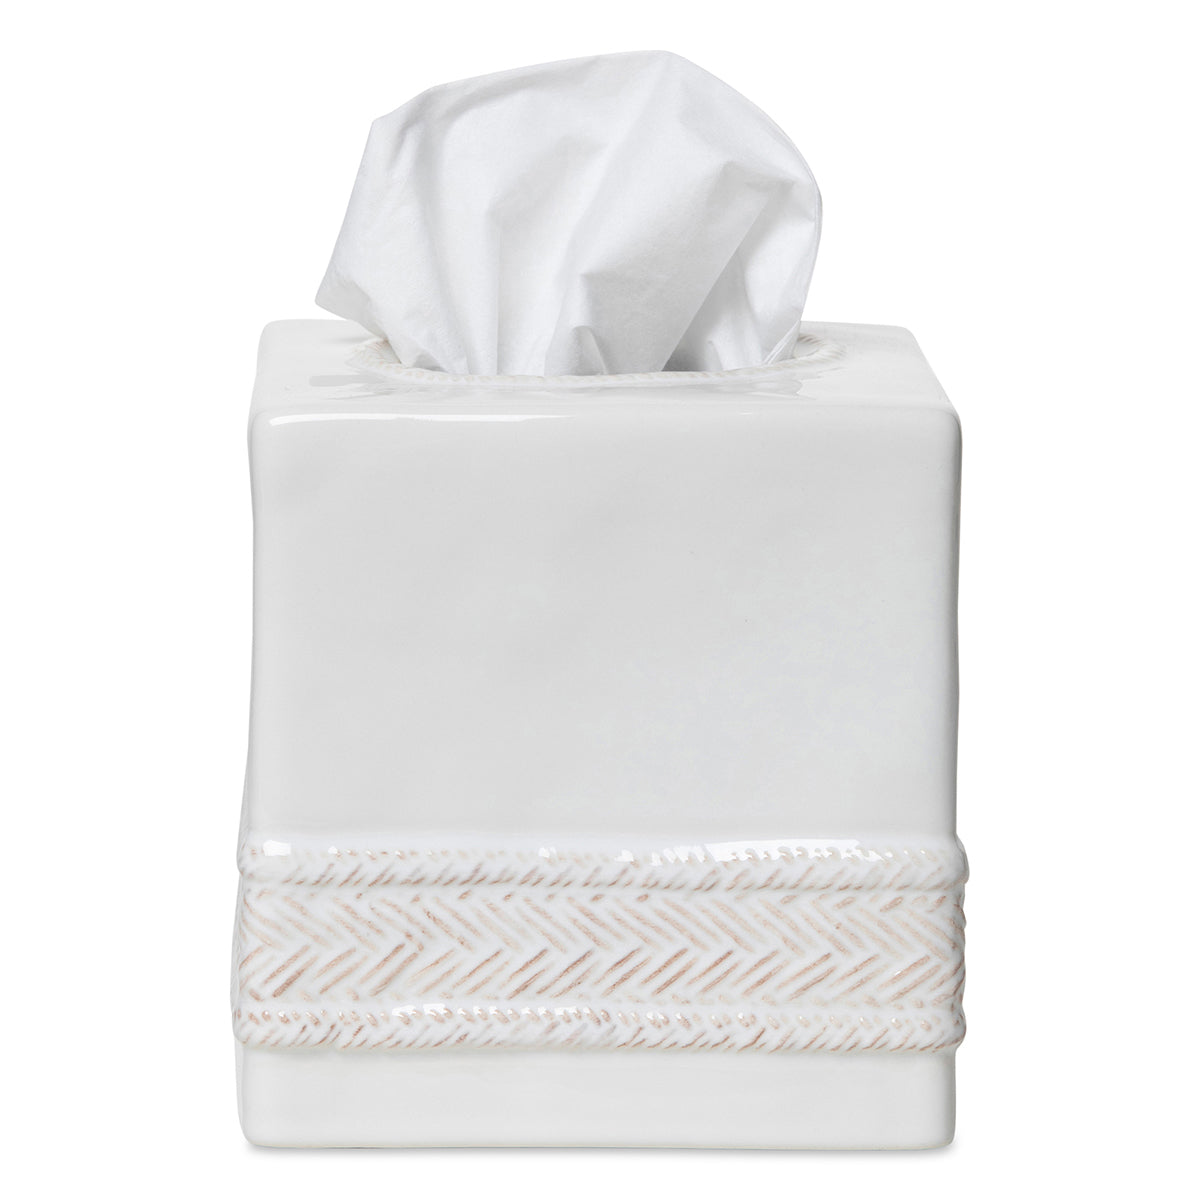 Le Panier Tissue Cover - Whitewash